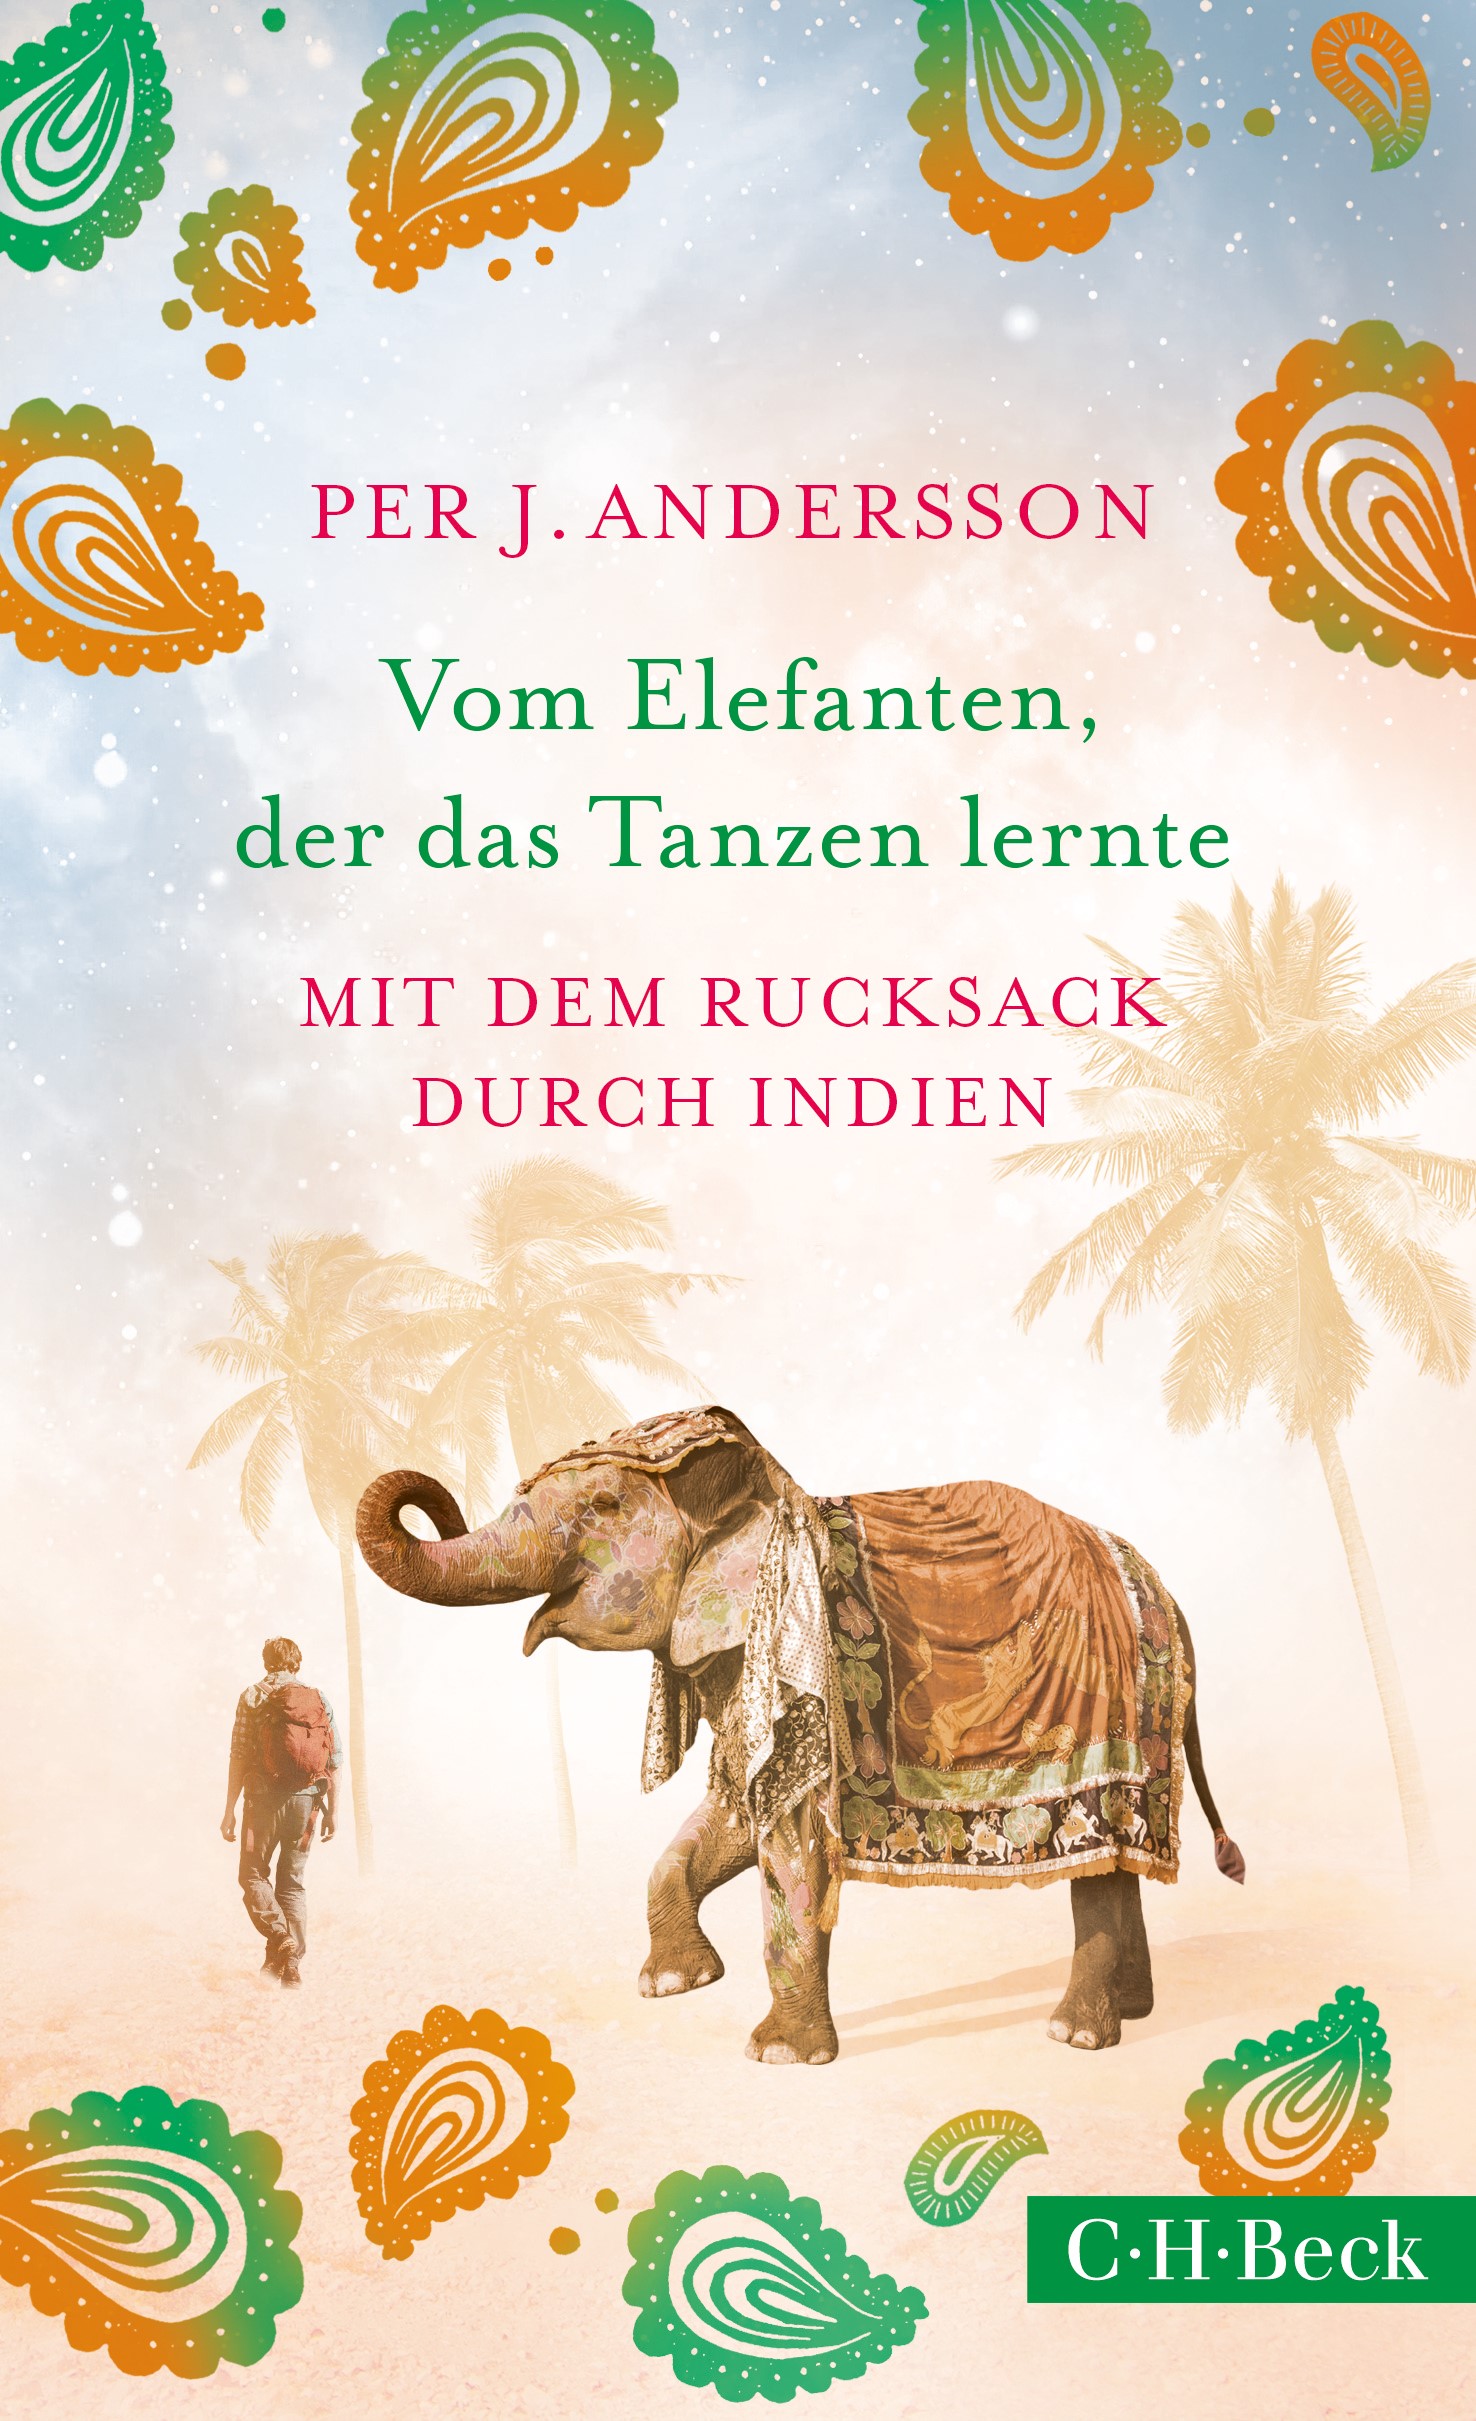 https://www.chbeck.de/andersson-j-vom-elefanten-tanzen-lernte/product/26750037